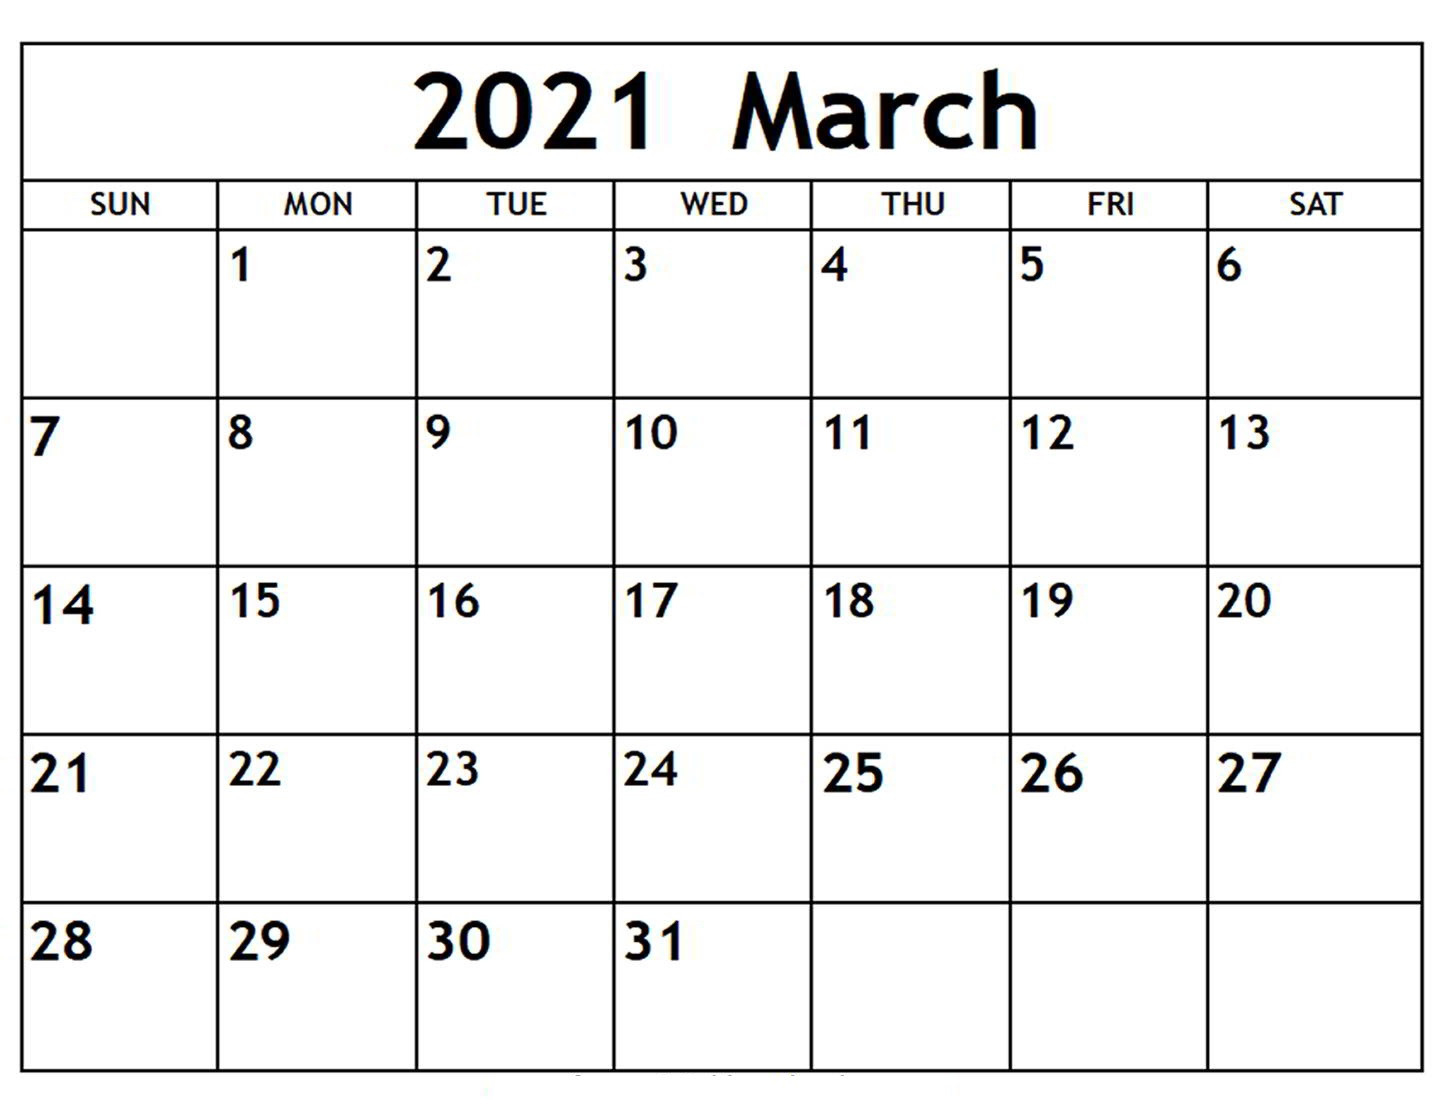 March 2021 Calendar Template With Holidays - Printable-2021 Holiday Calendar Spreadsheet